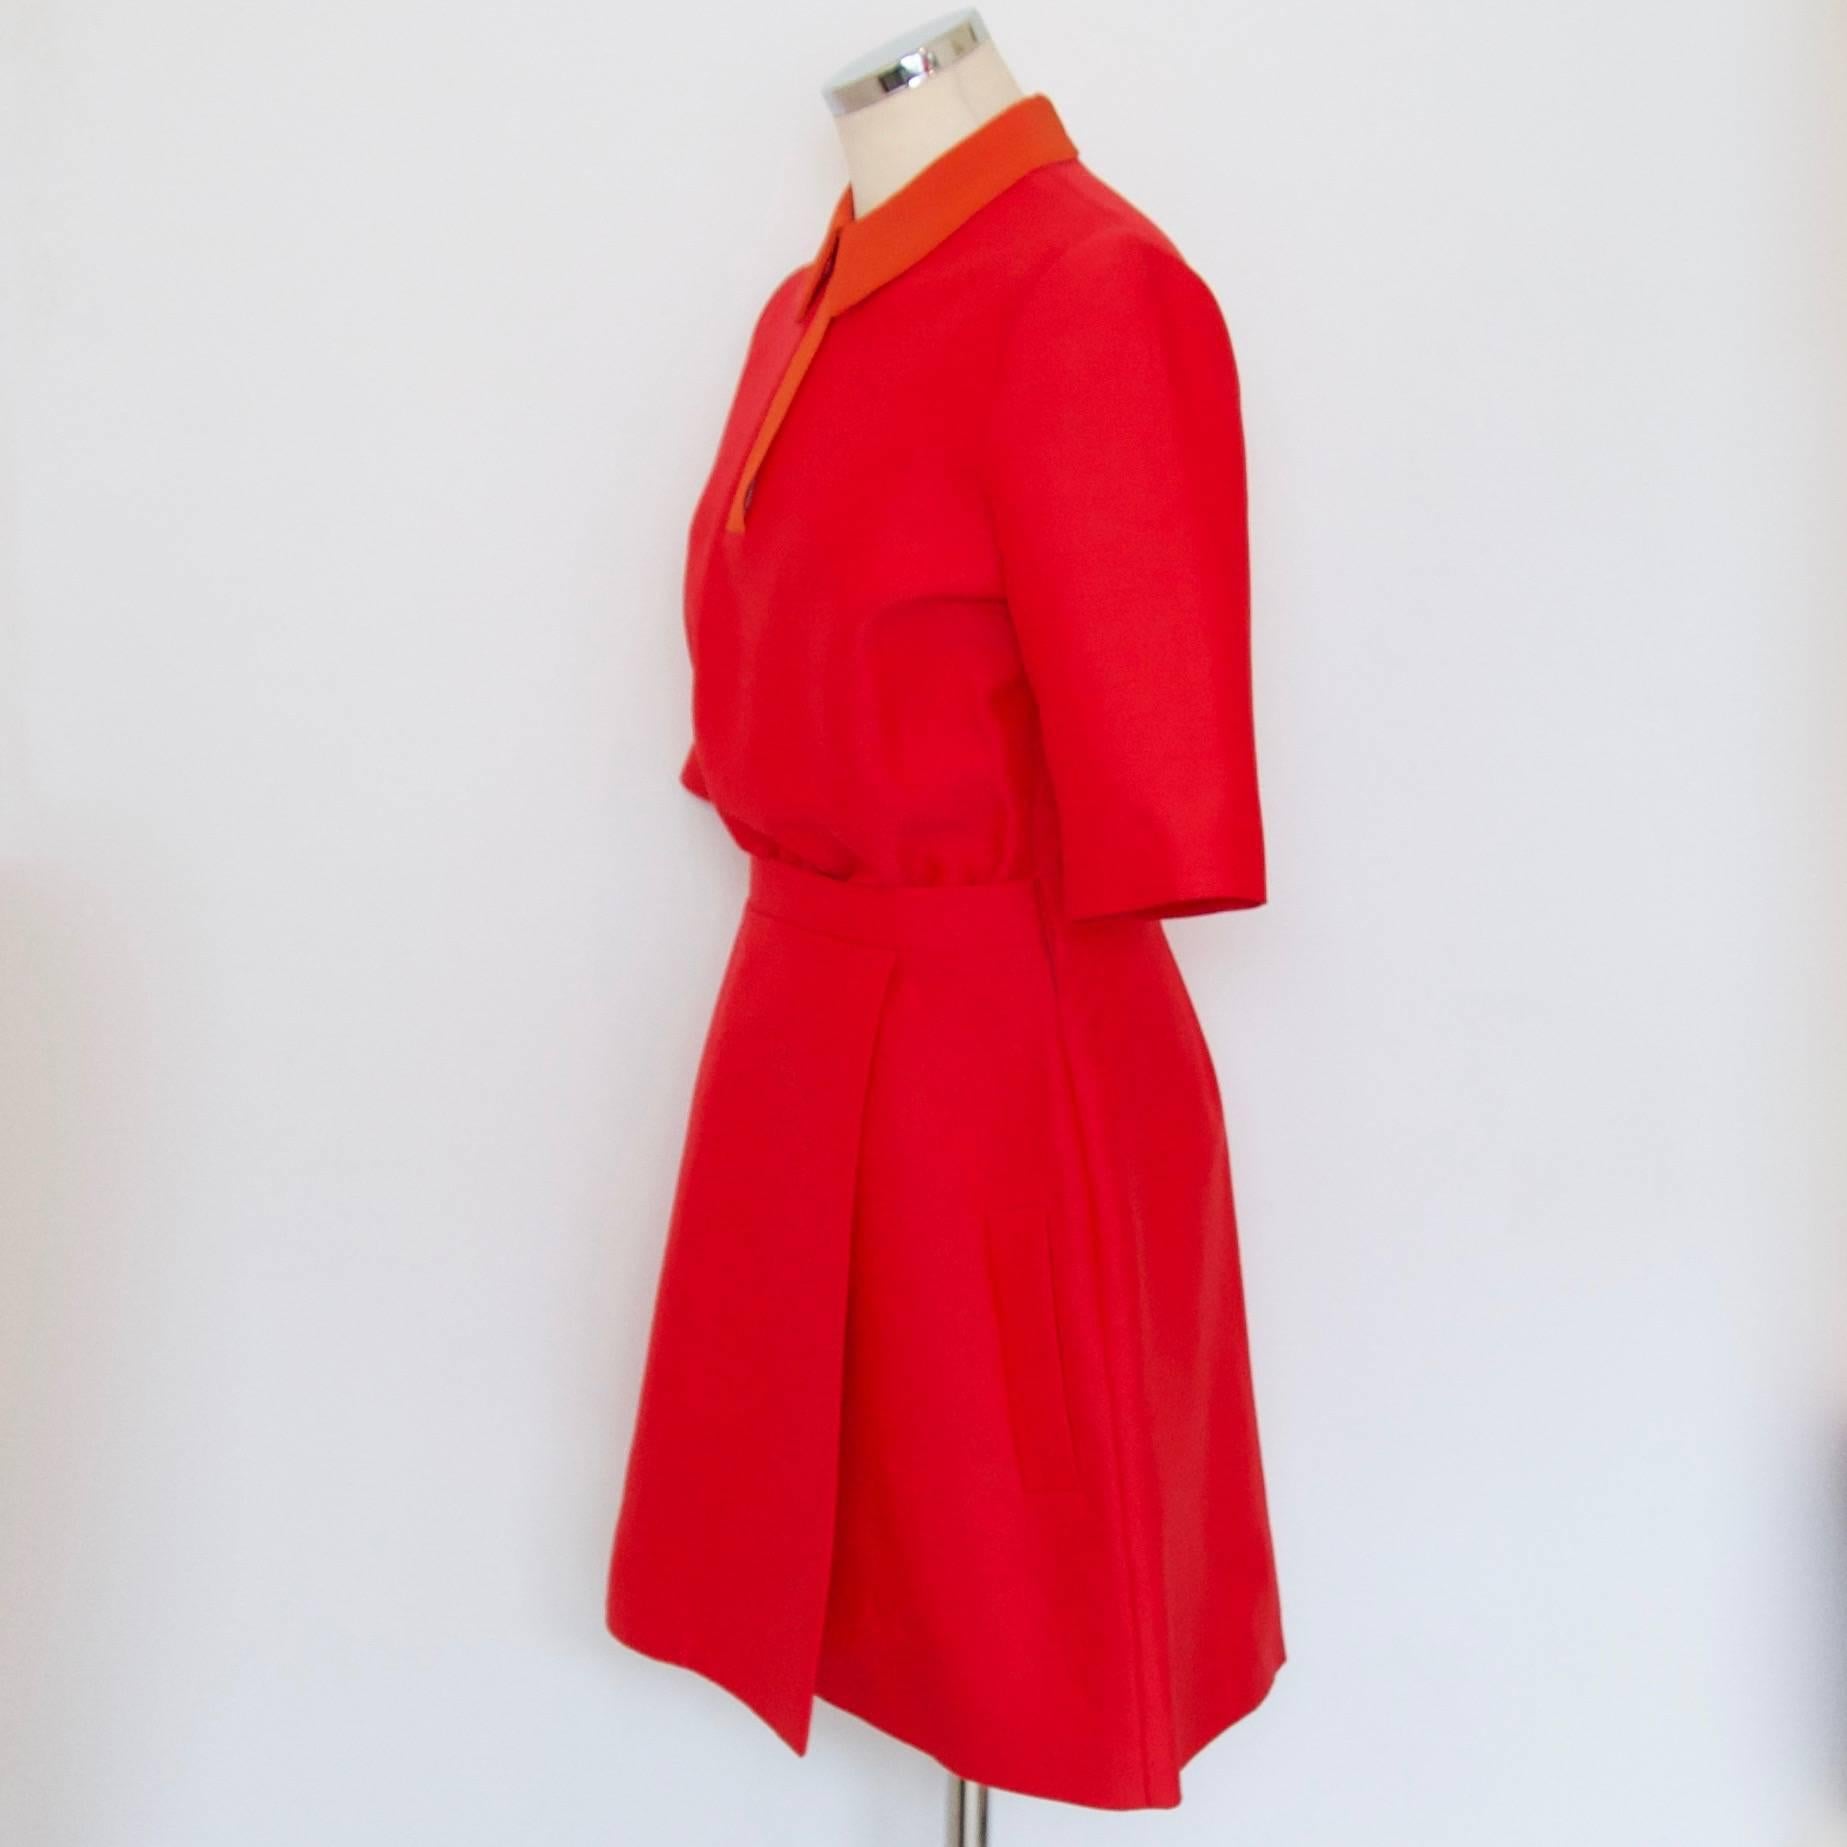 Victoria Beckham
Red day dress

51% Viscose
49% Cotton